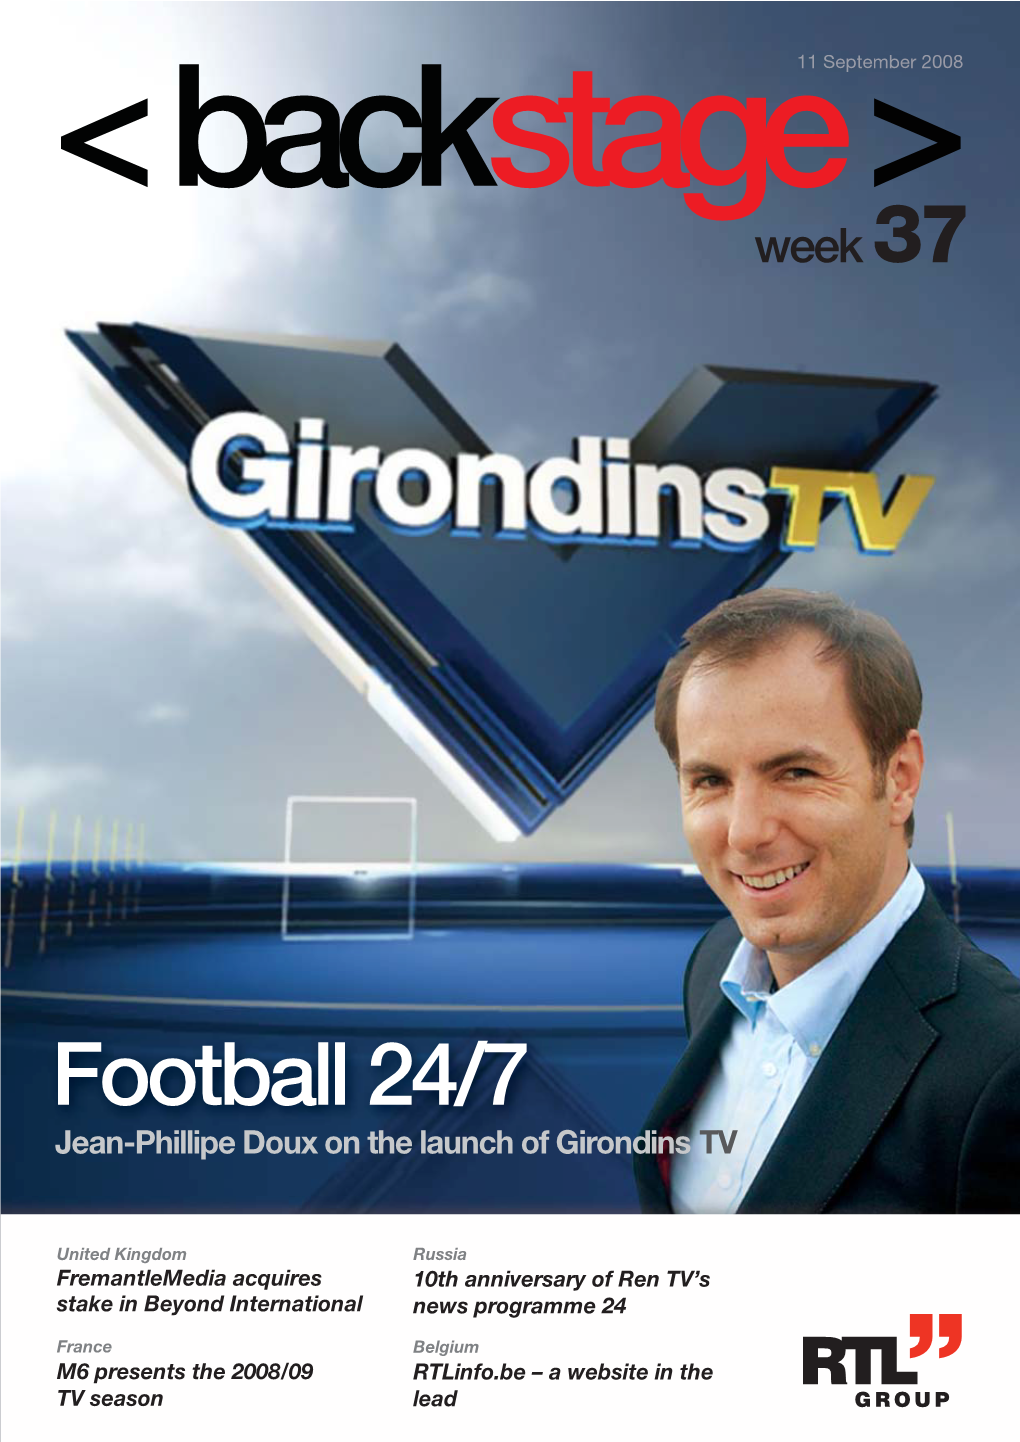 Football 24/7 Jean-Phillipe Doux on the Launch of Girondins TV